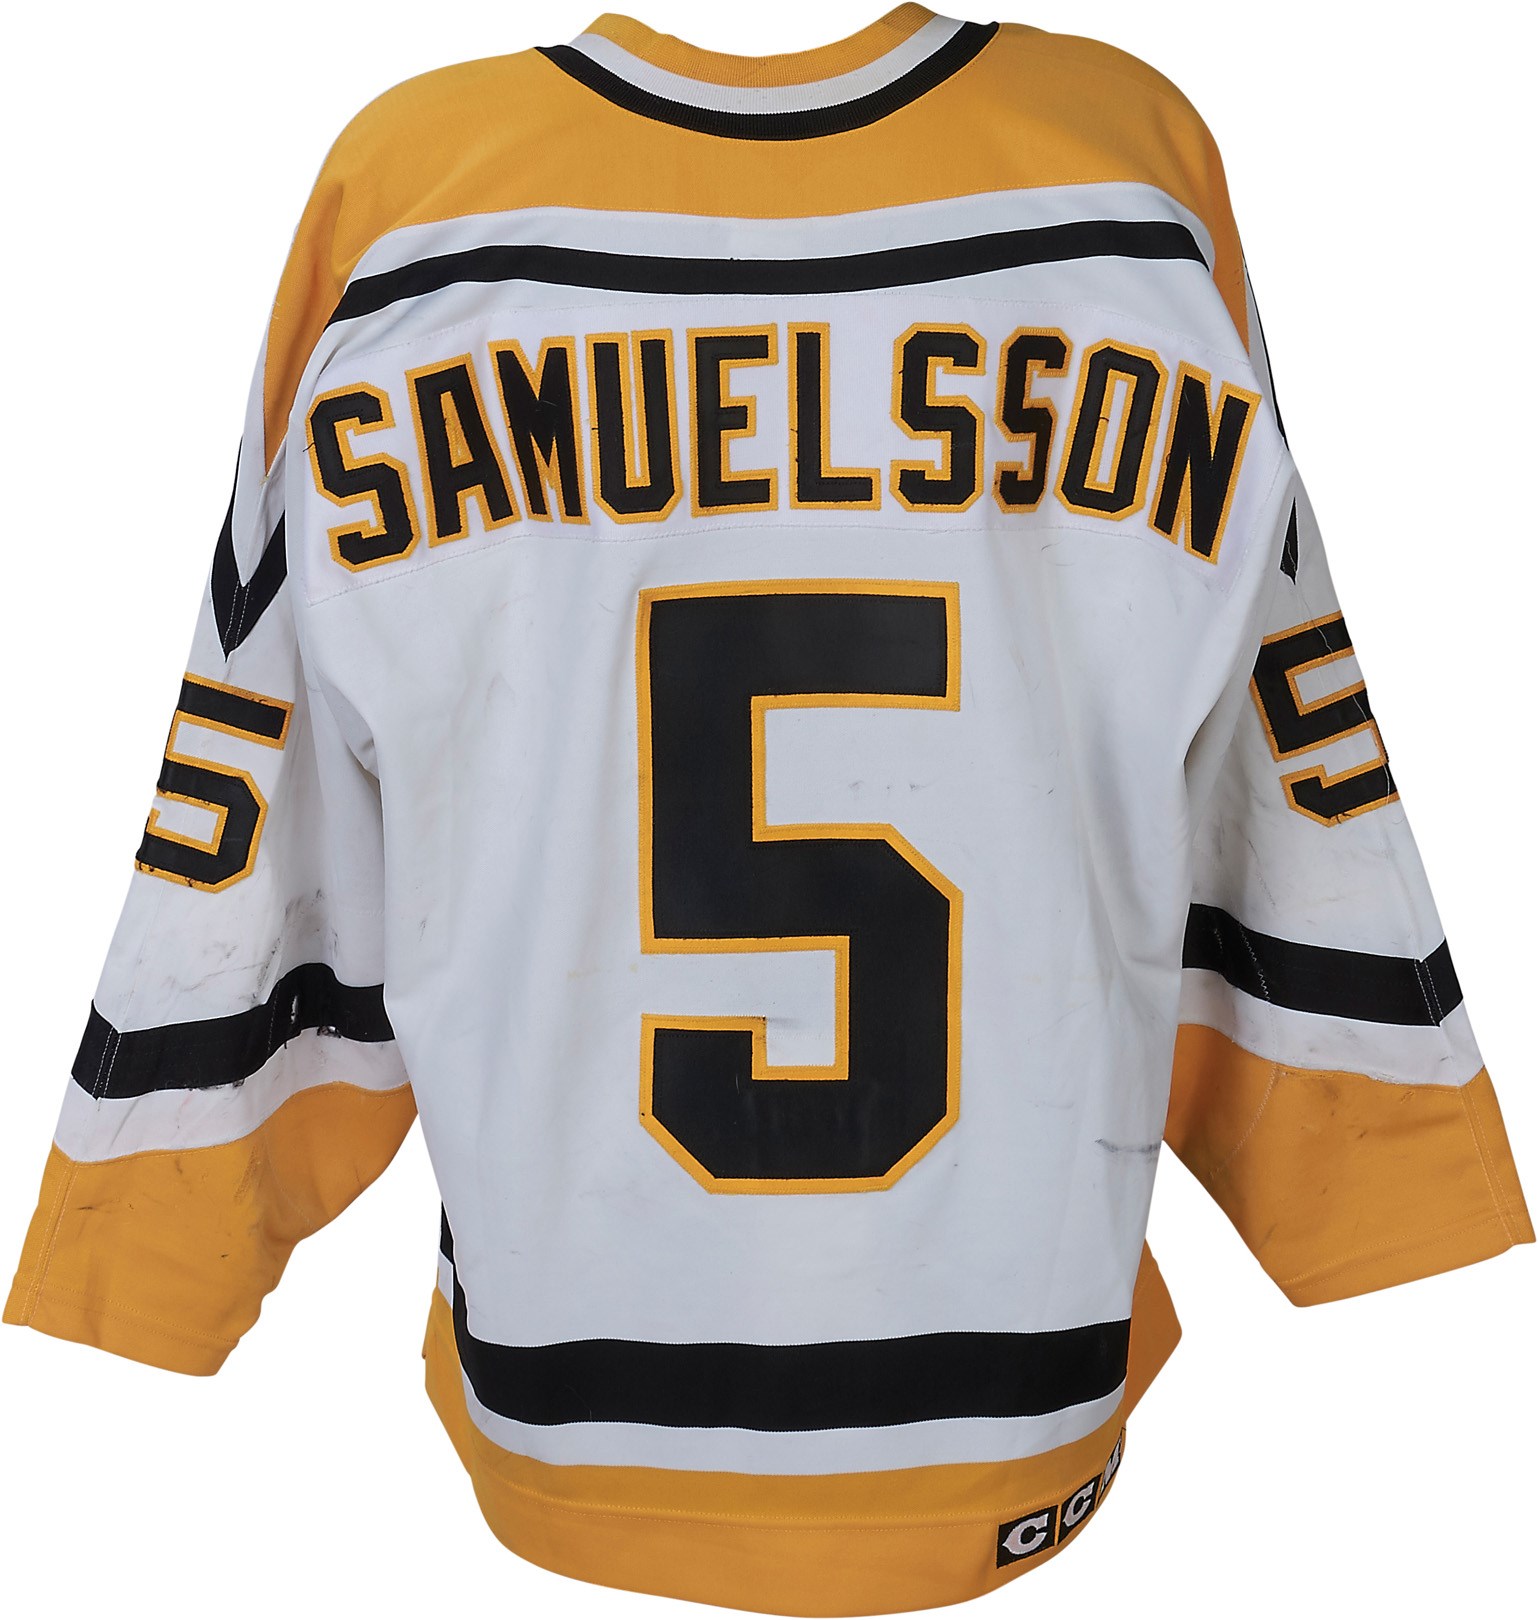 Hockey - 1993-94 Ulf Samuelsson Pittsburgh Penguins Game Used Jersey